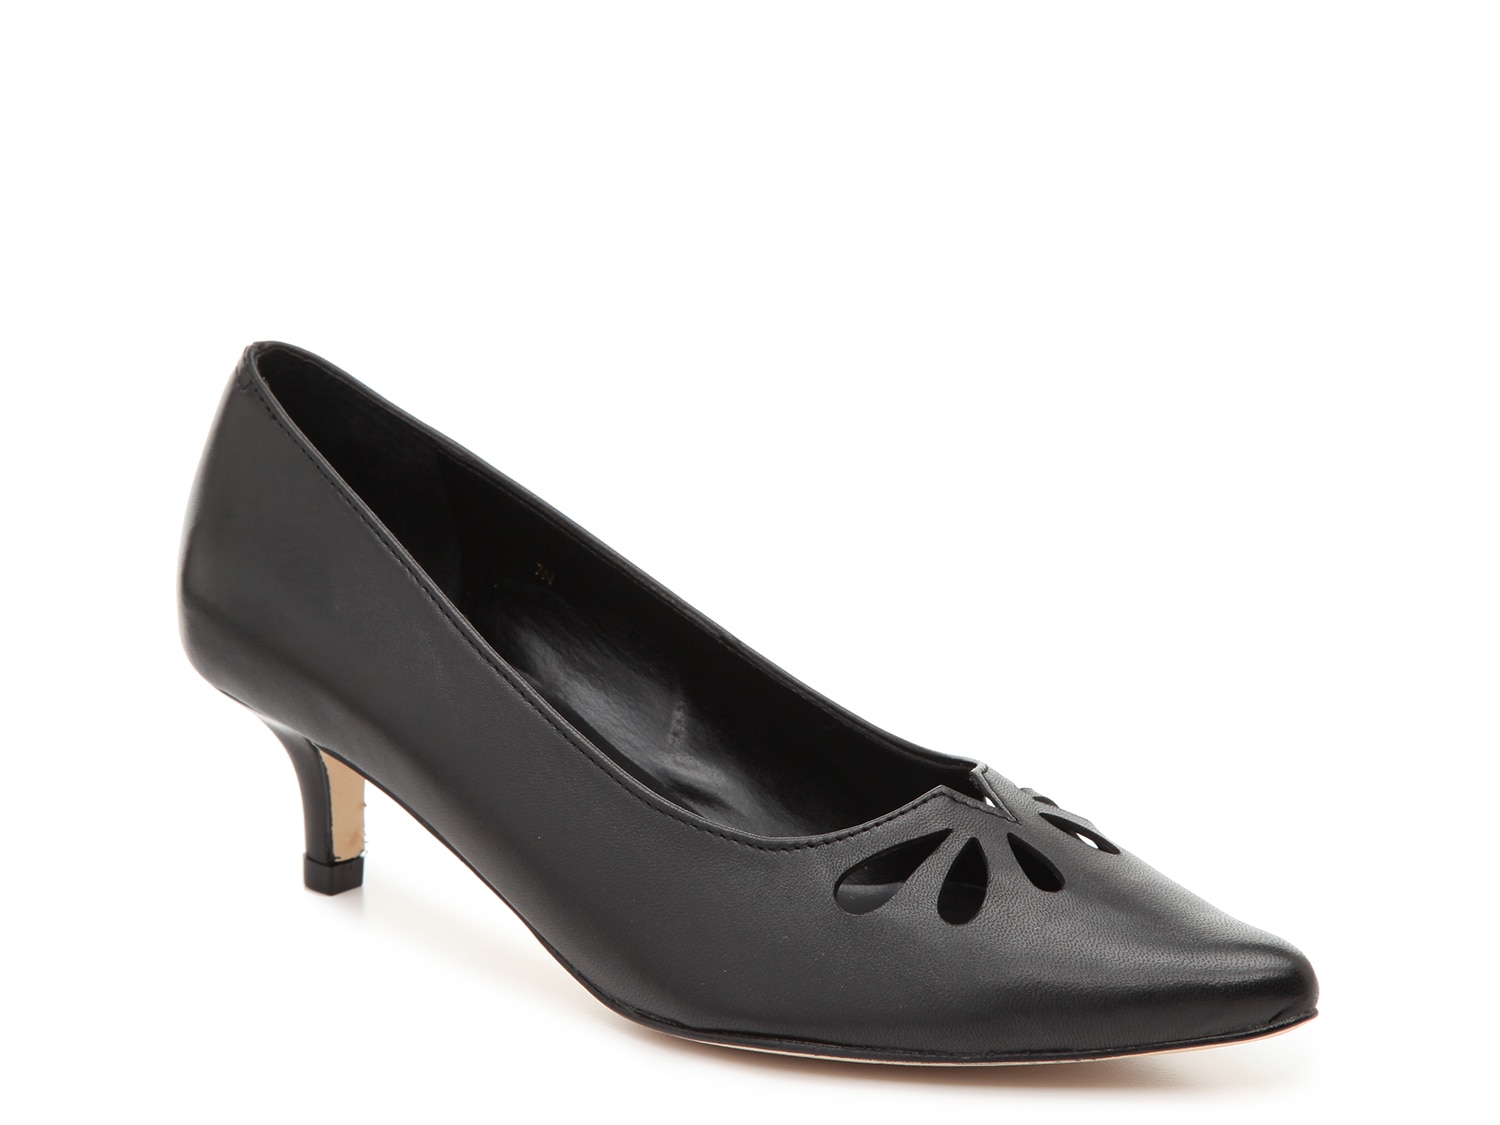 VANELi "Tany" Women's Black Patent Leather Point Toe Kitten Heel Pumps